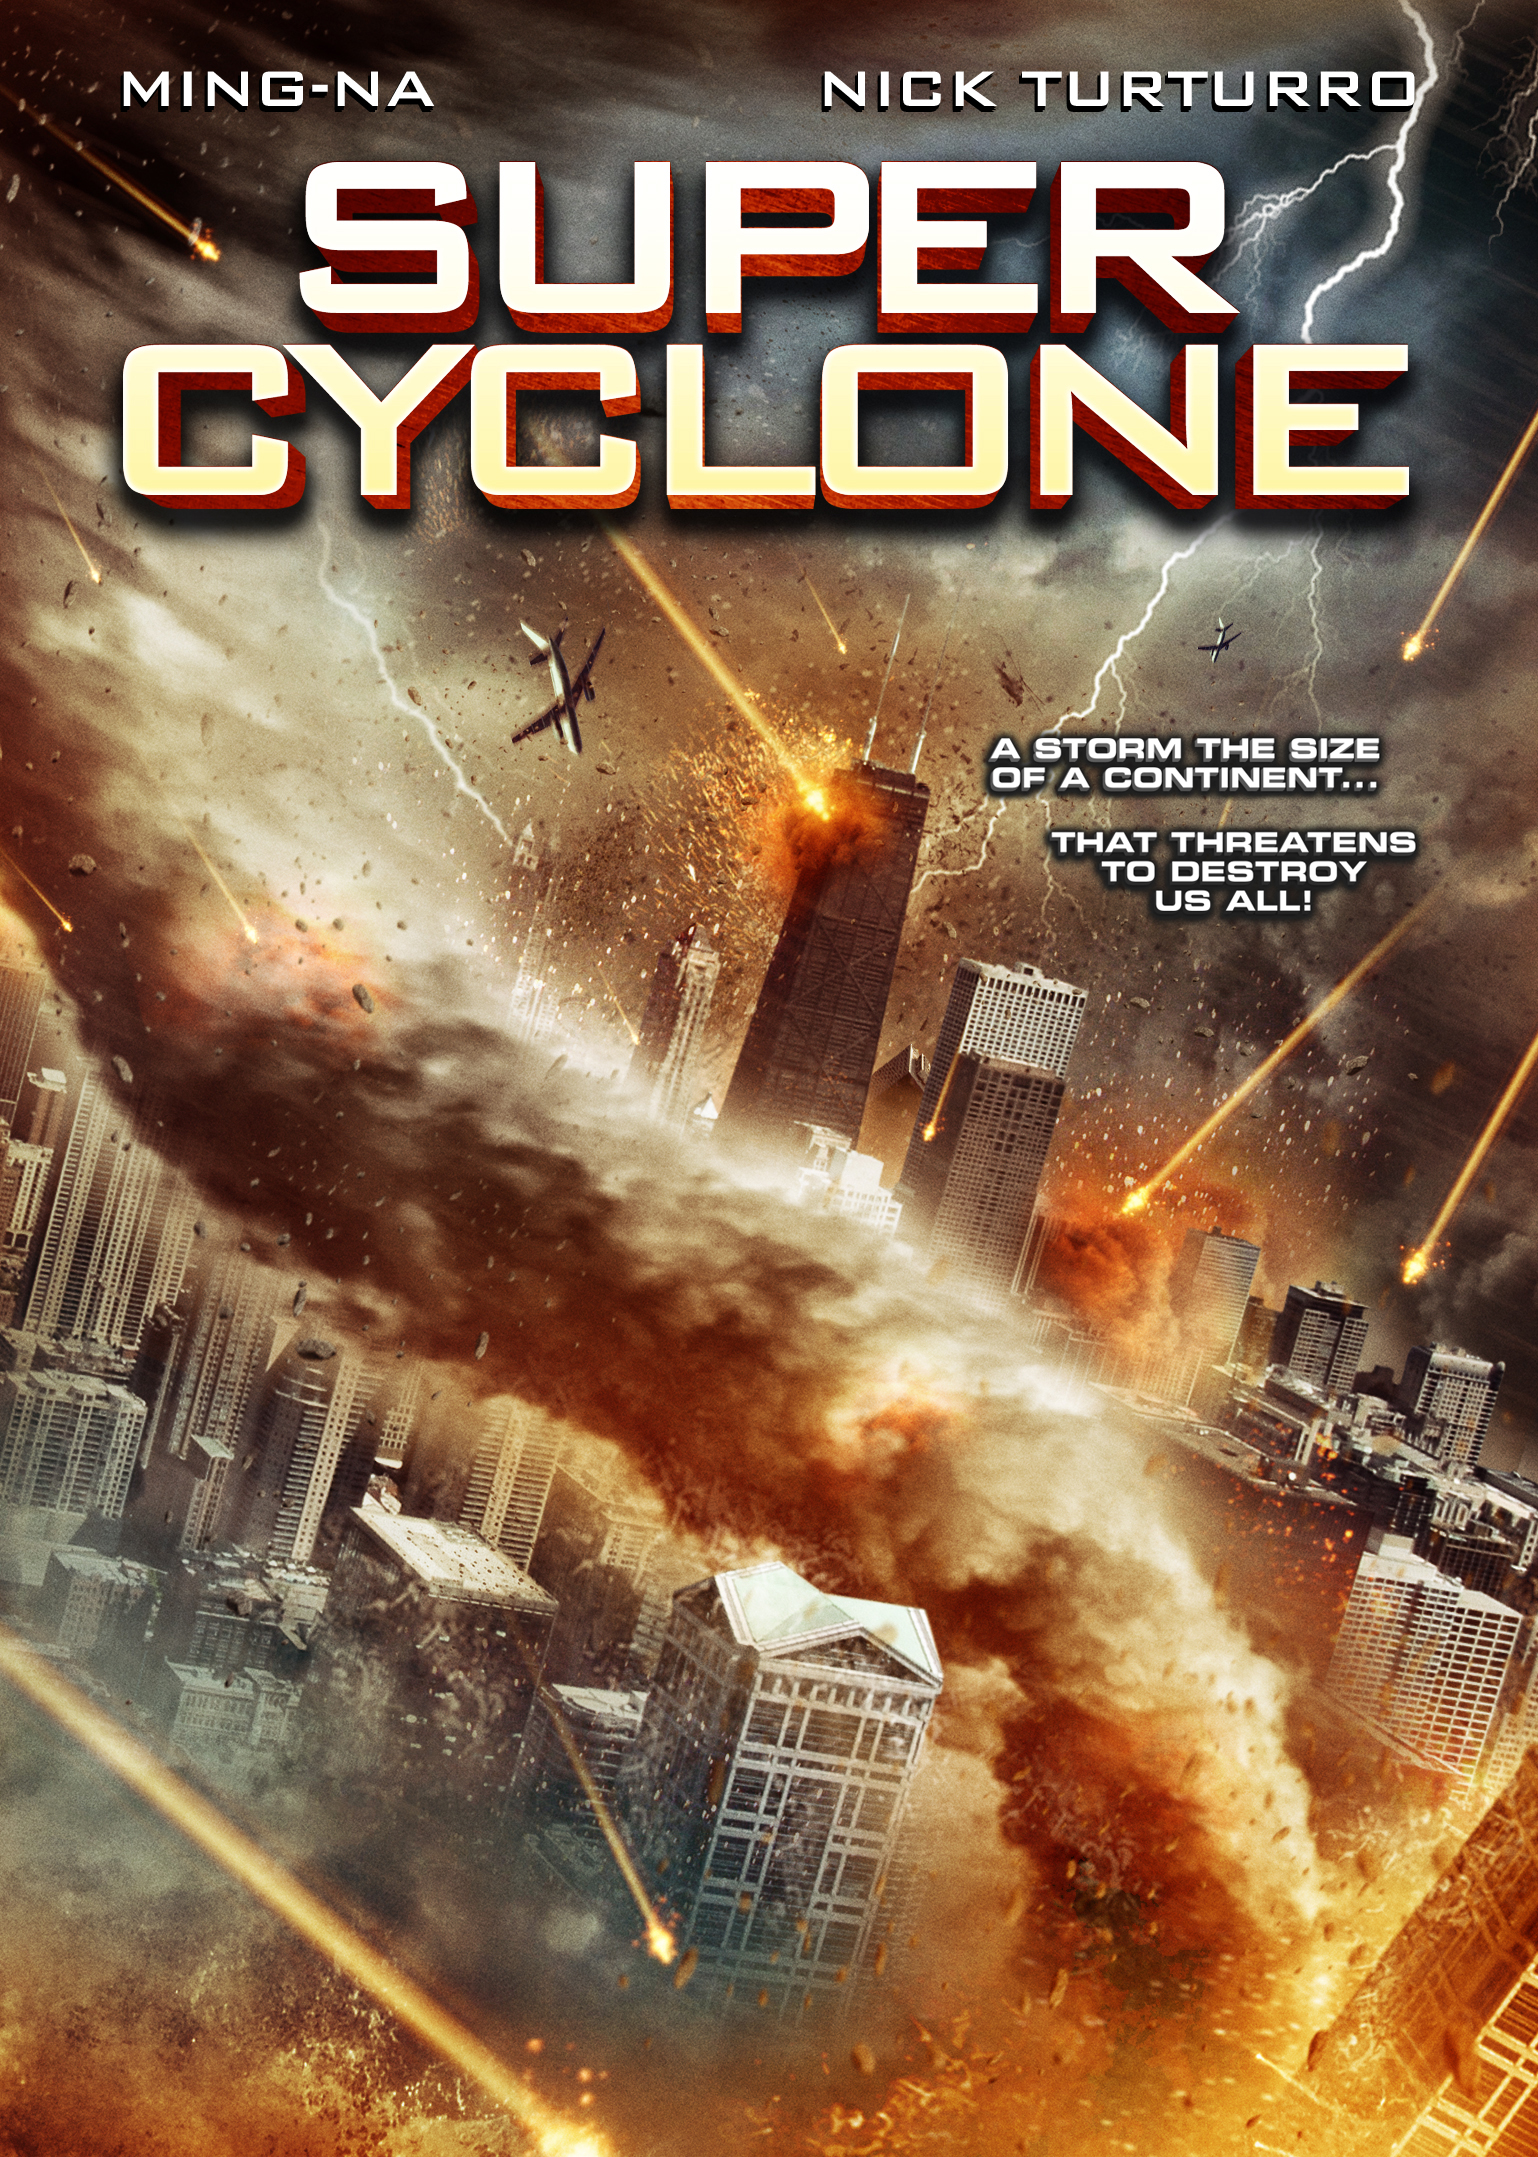 Super Cyclone (2012) starring Ming-Na Wen on DVD on DVD